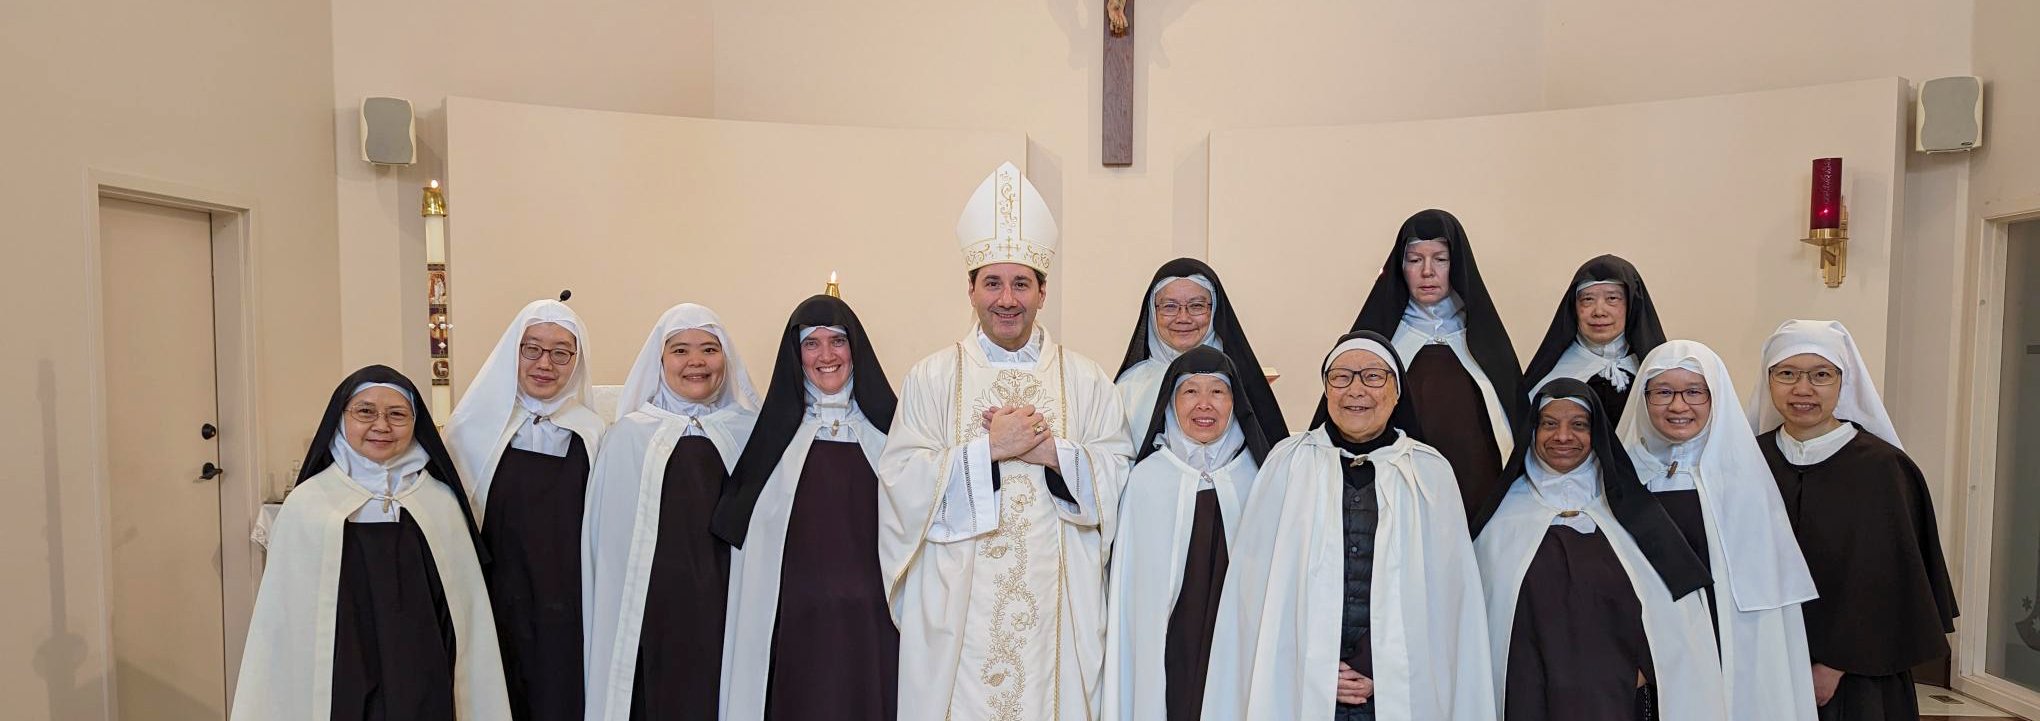 Archbishop Leo with Carmelites